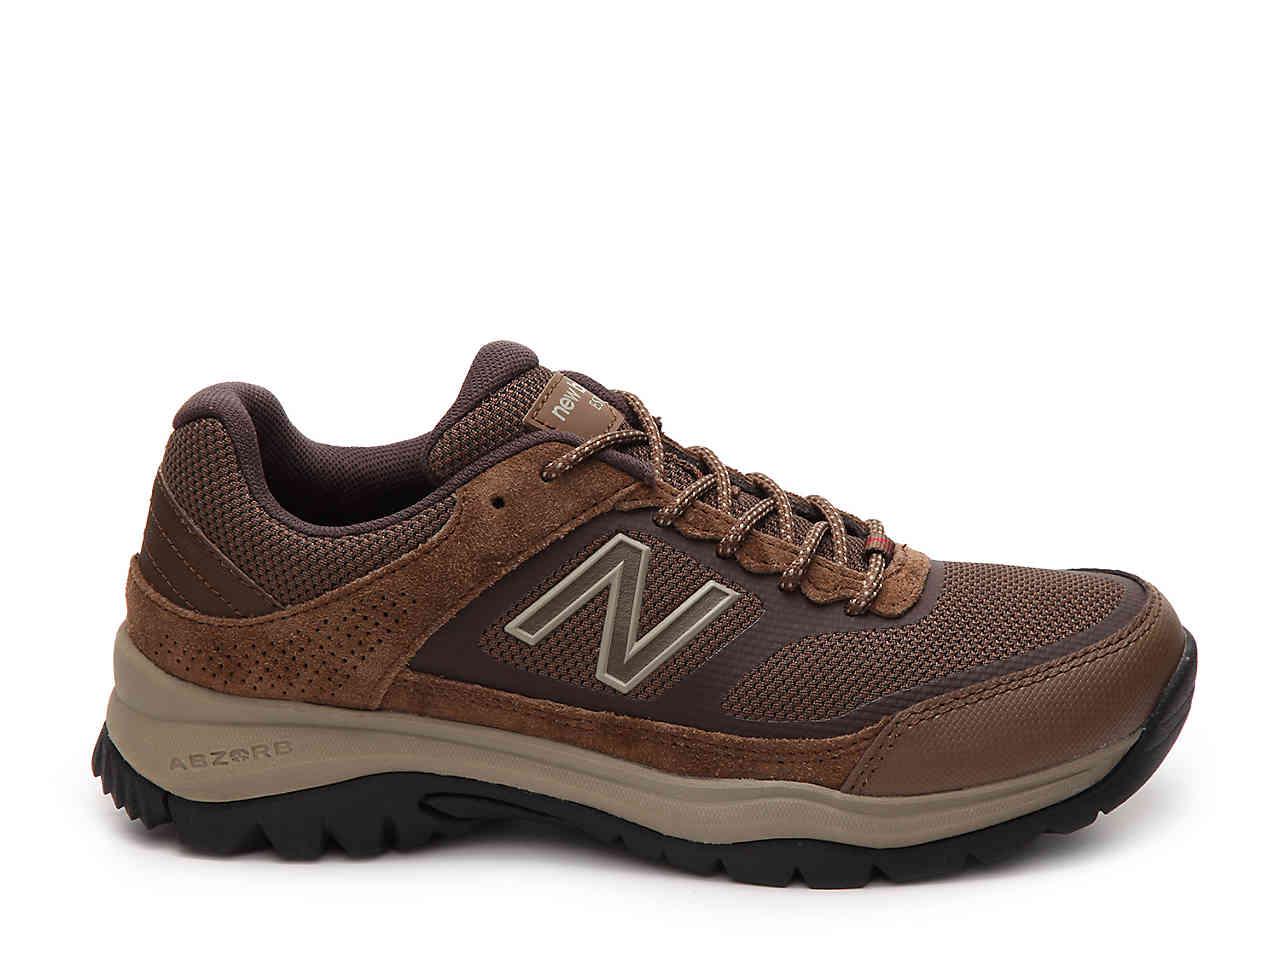 New Balance 669 Trail Walking Shoe in Brown for Men - Lyst